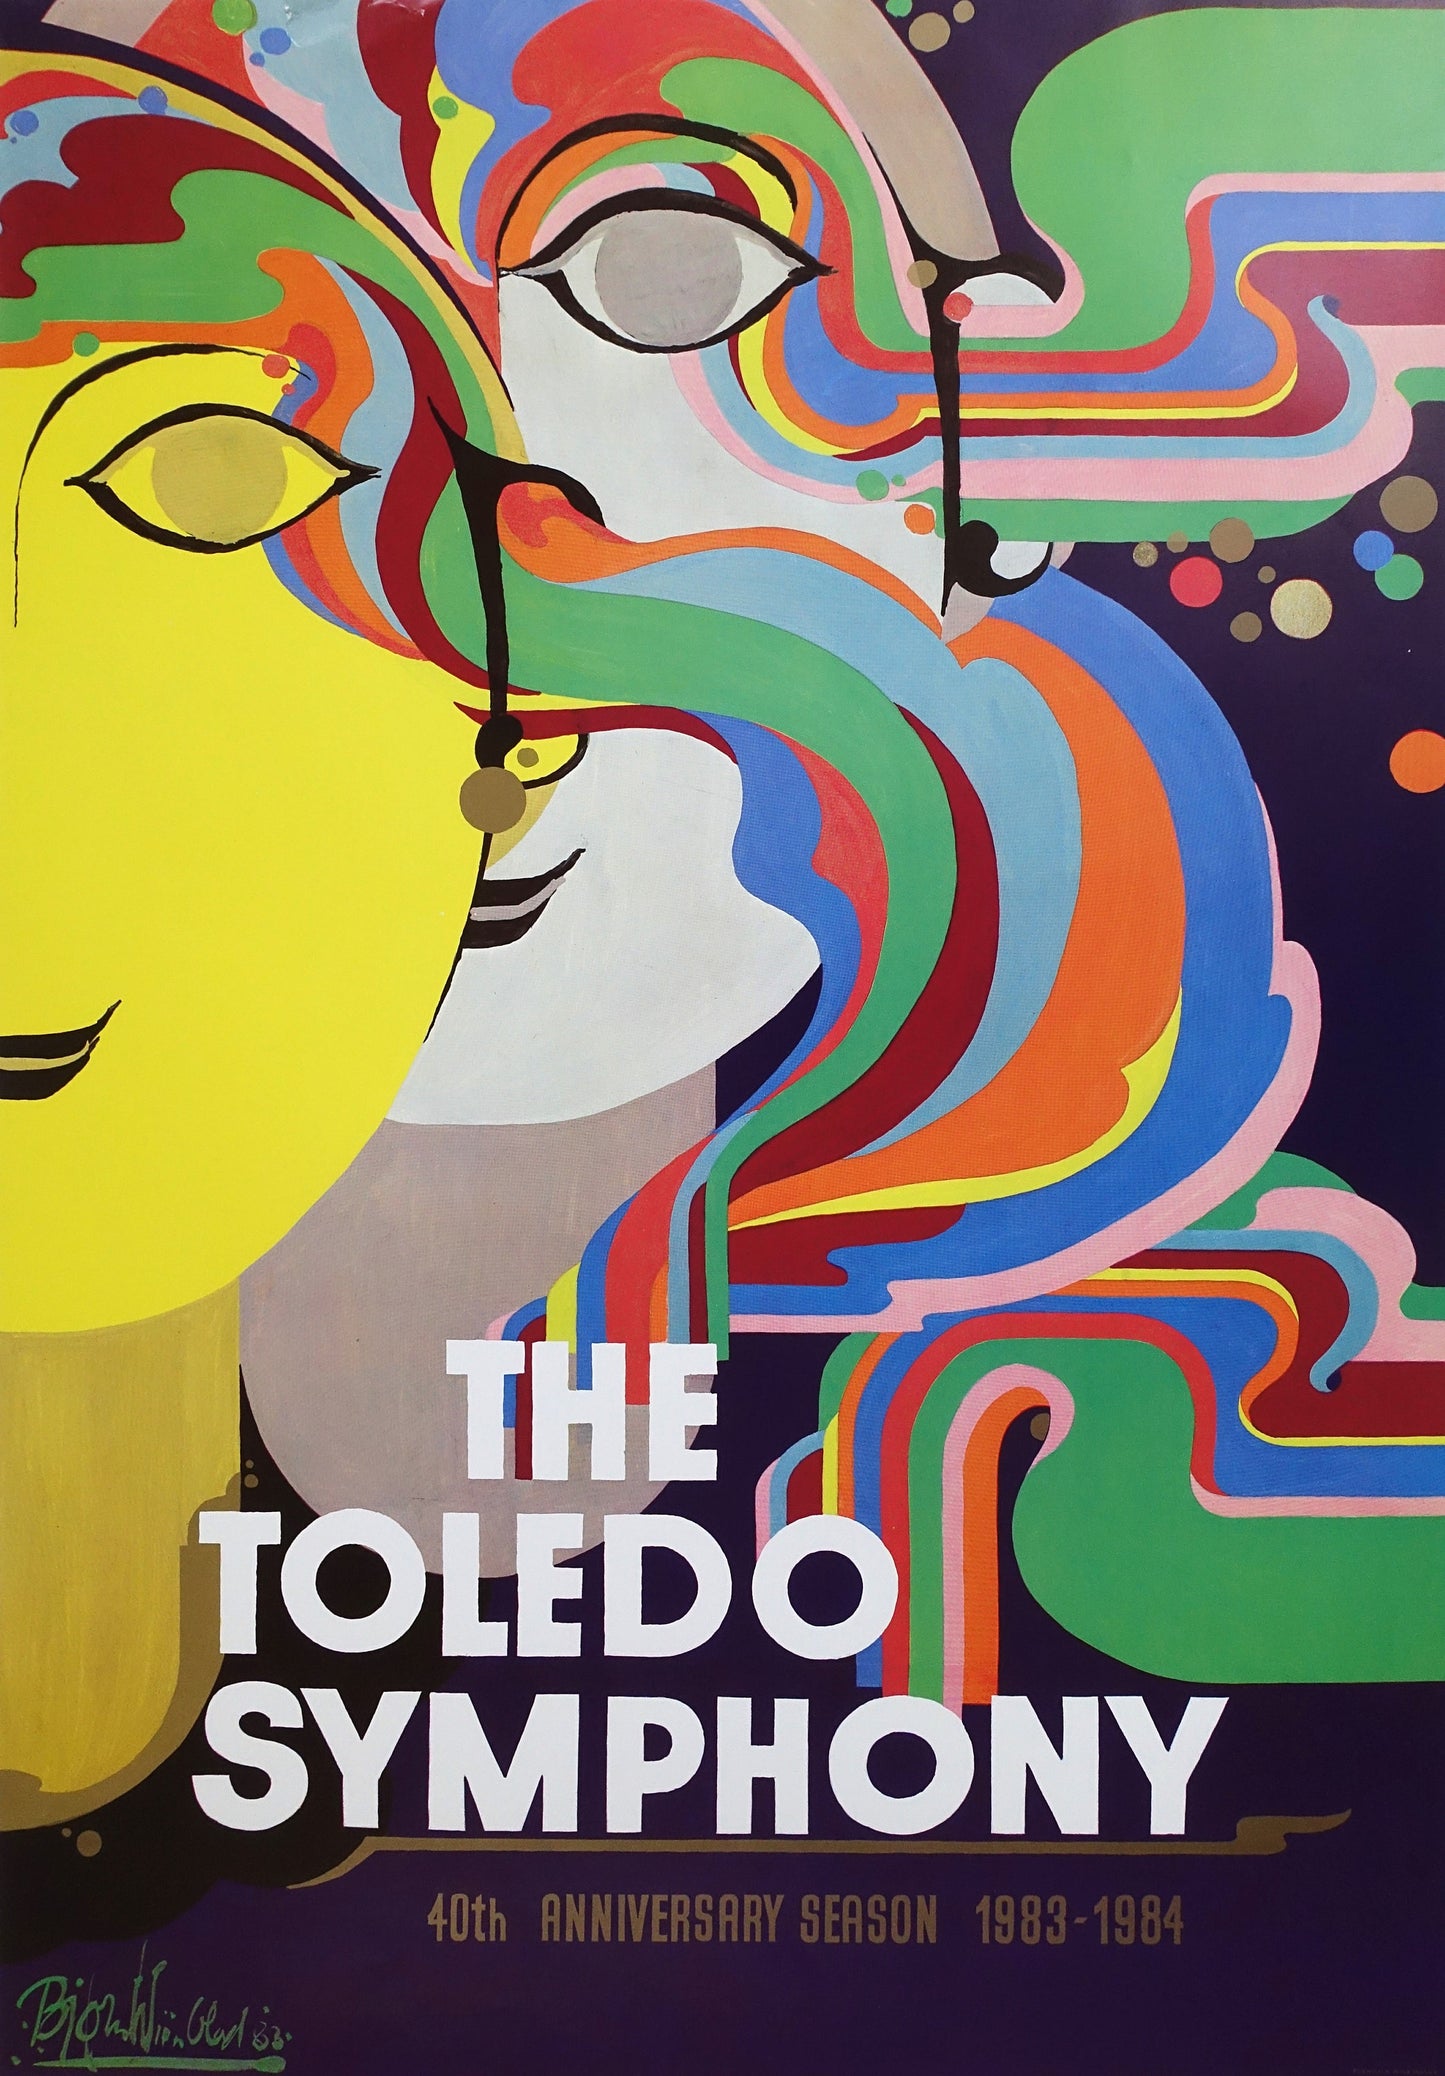 1983 Wiinblad's "The Toledo Symphony" - Original Vintage Poster